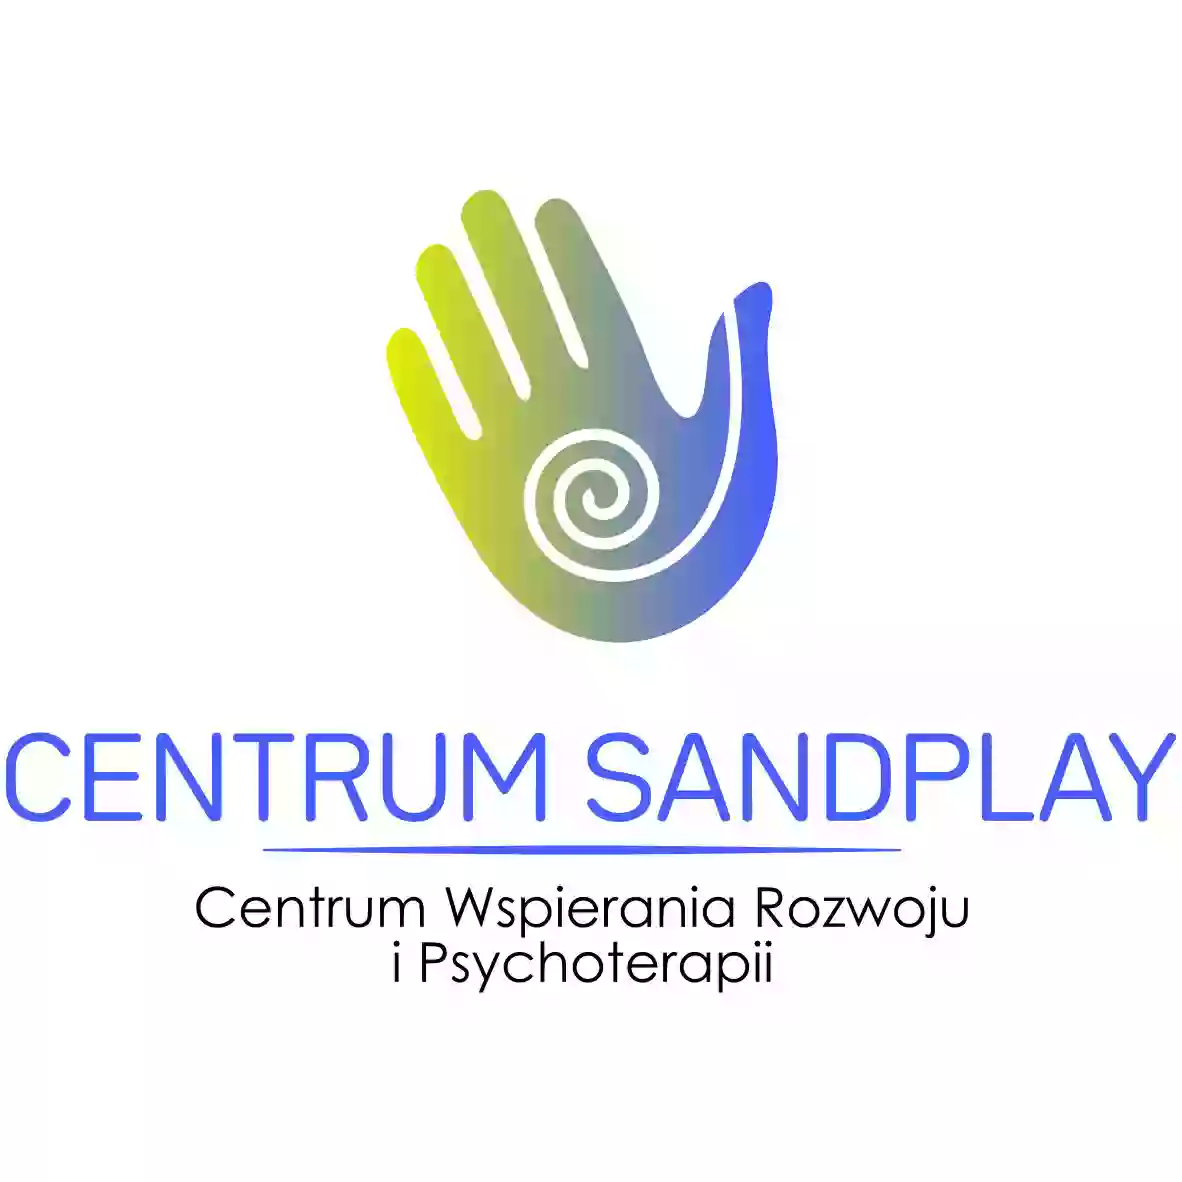 Centrum Sandplay